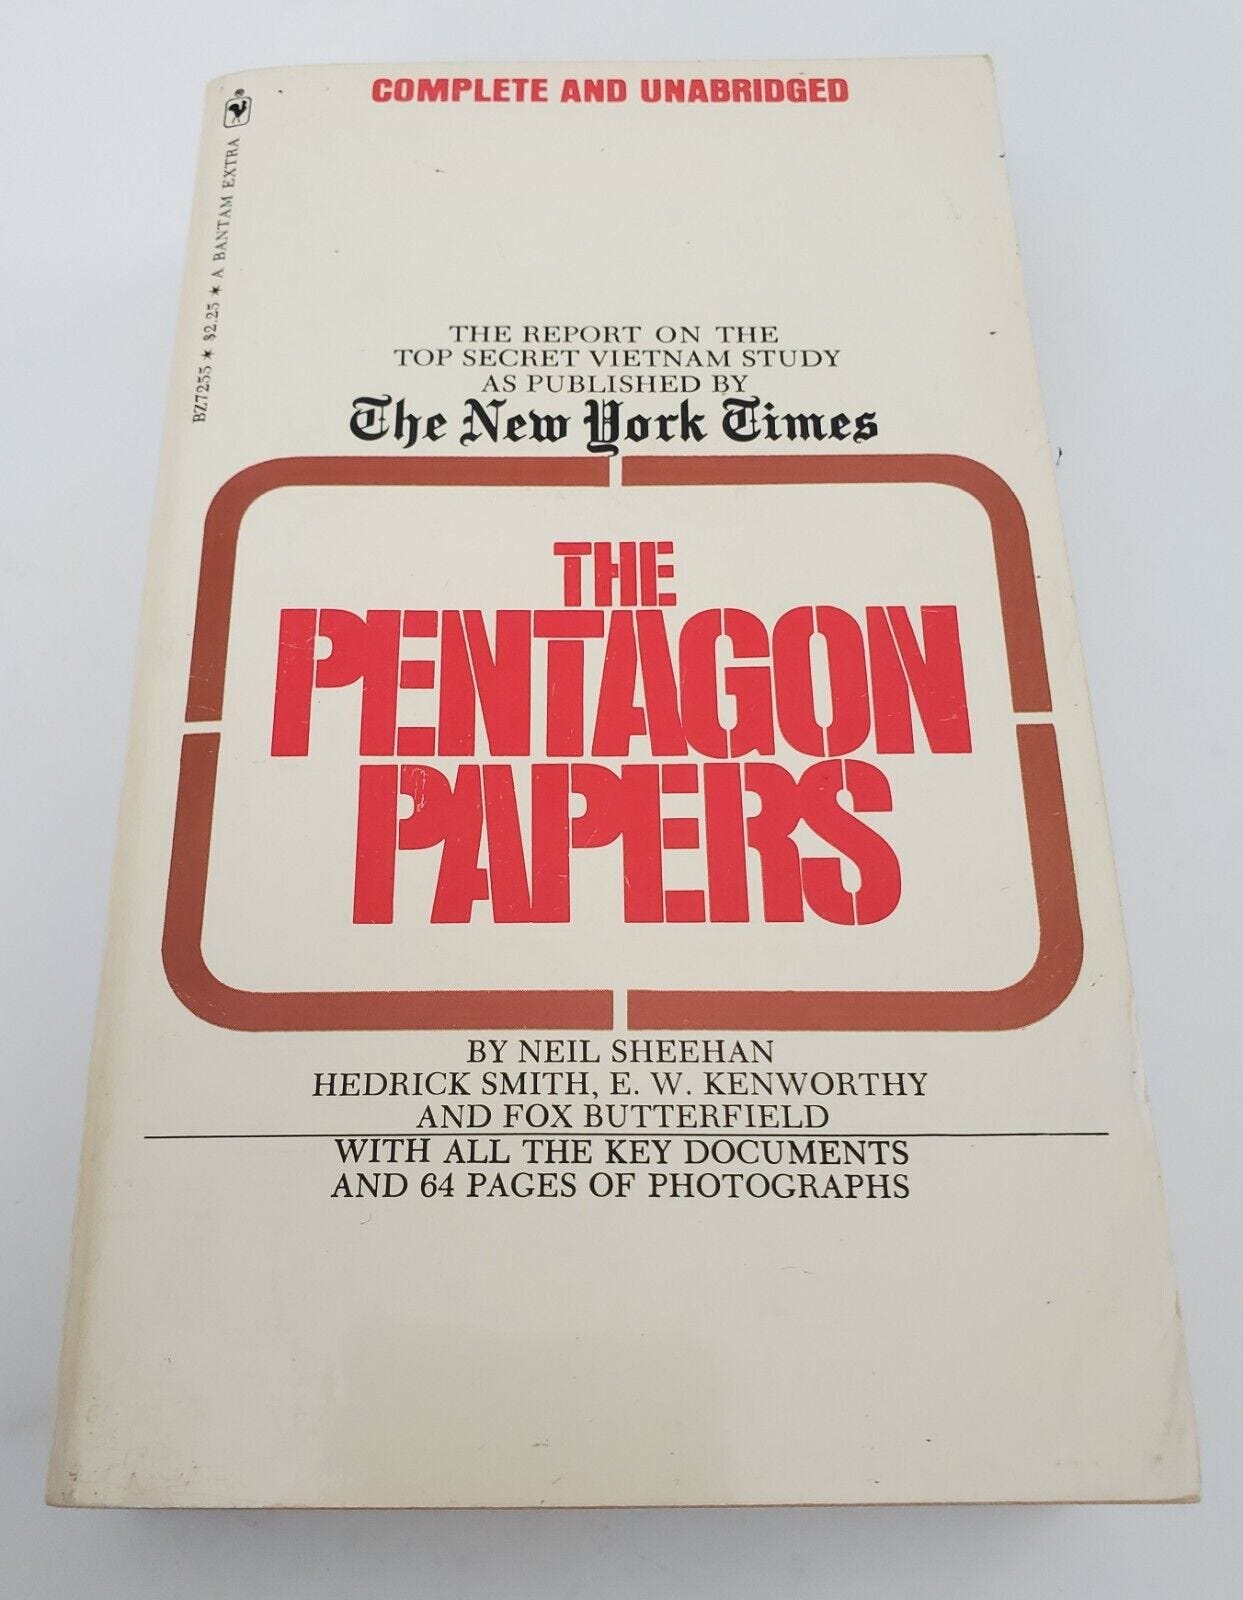 Daniel Ellsberg, Biography, Pentagon Papers, & Facts